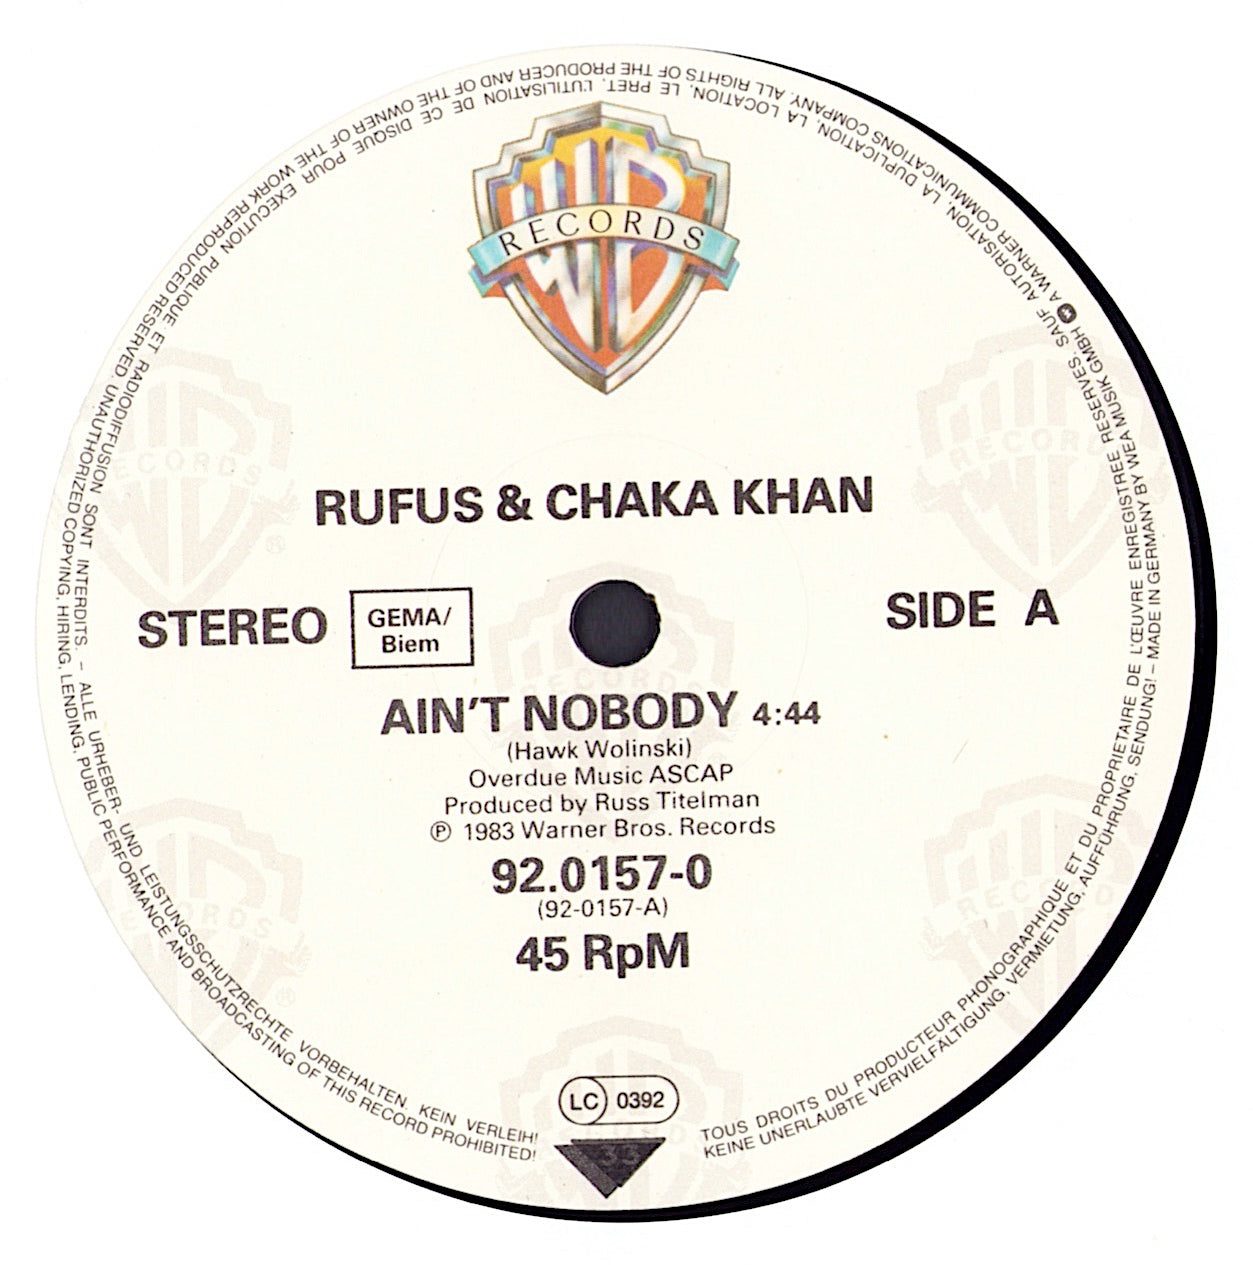 Rufus & Chaka Khan - Ain't Nobody Vinyl 12" Maxi